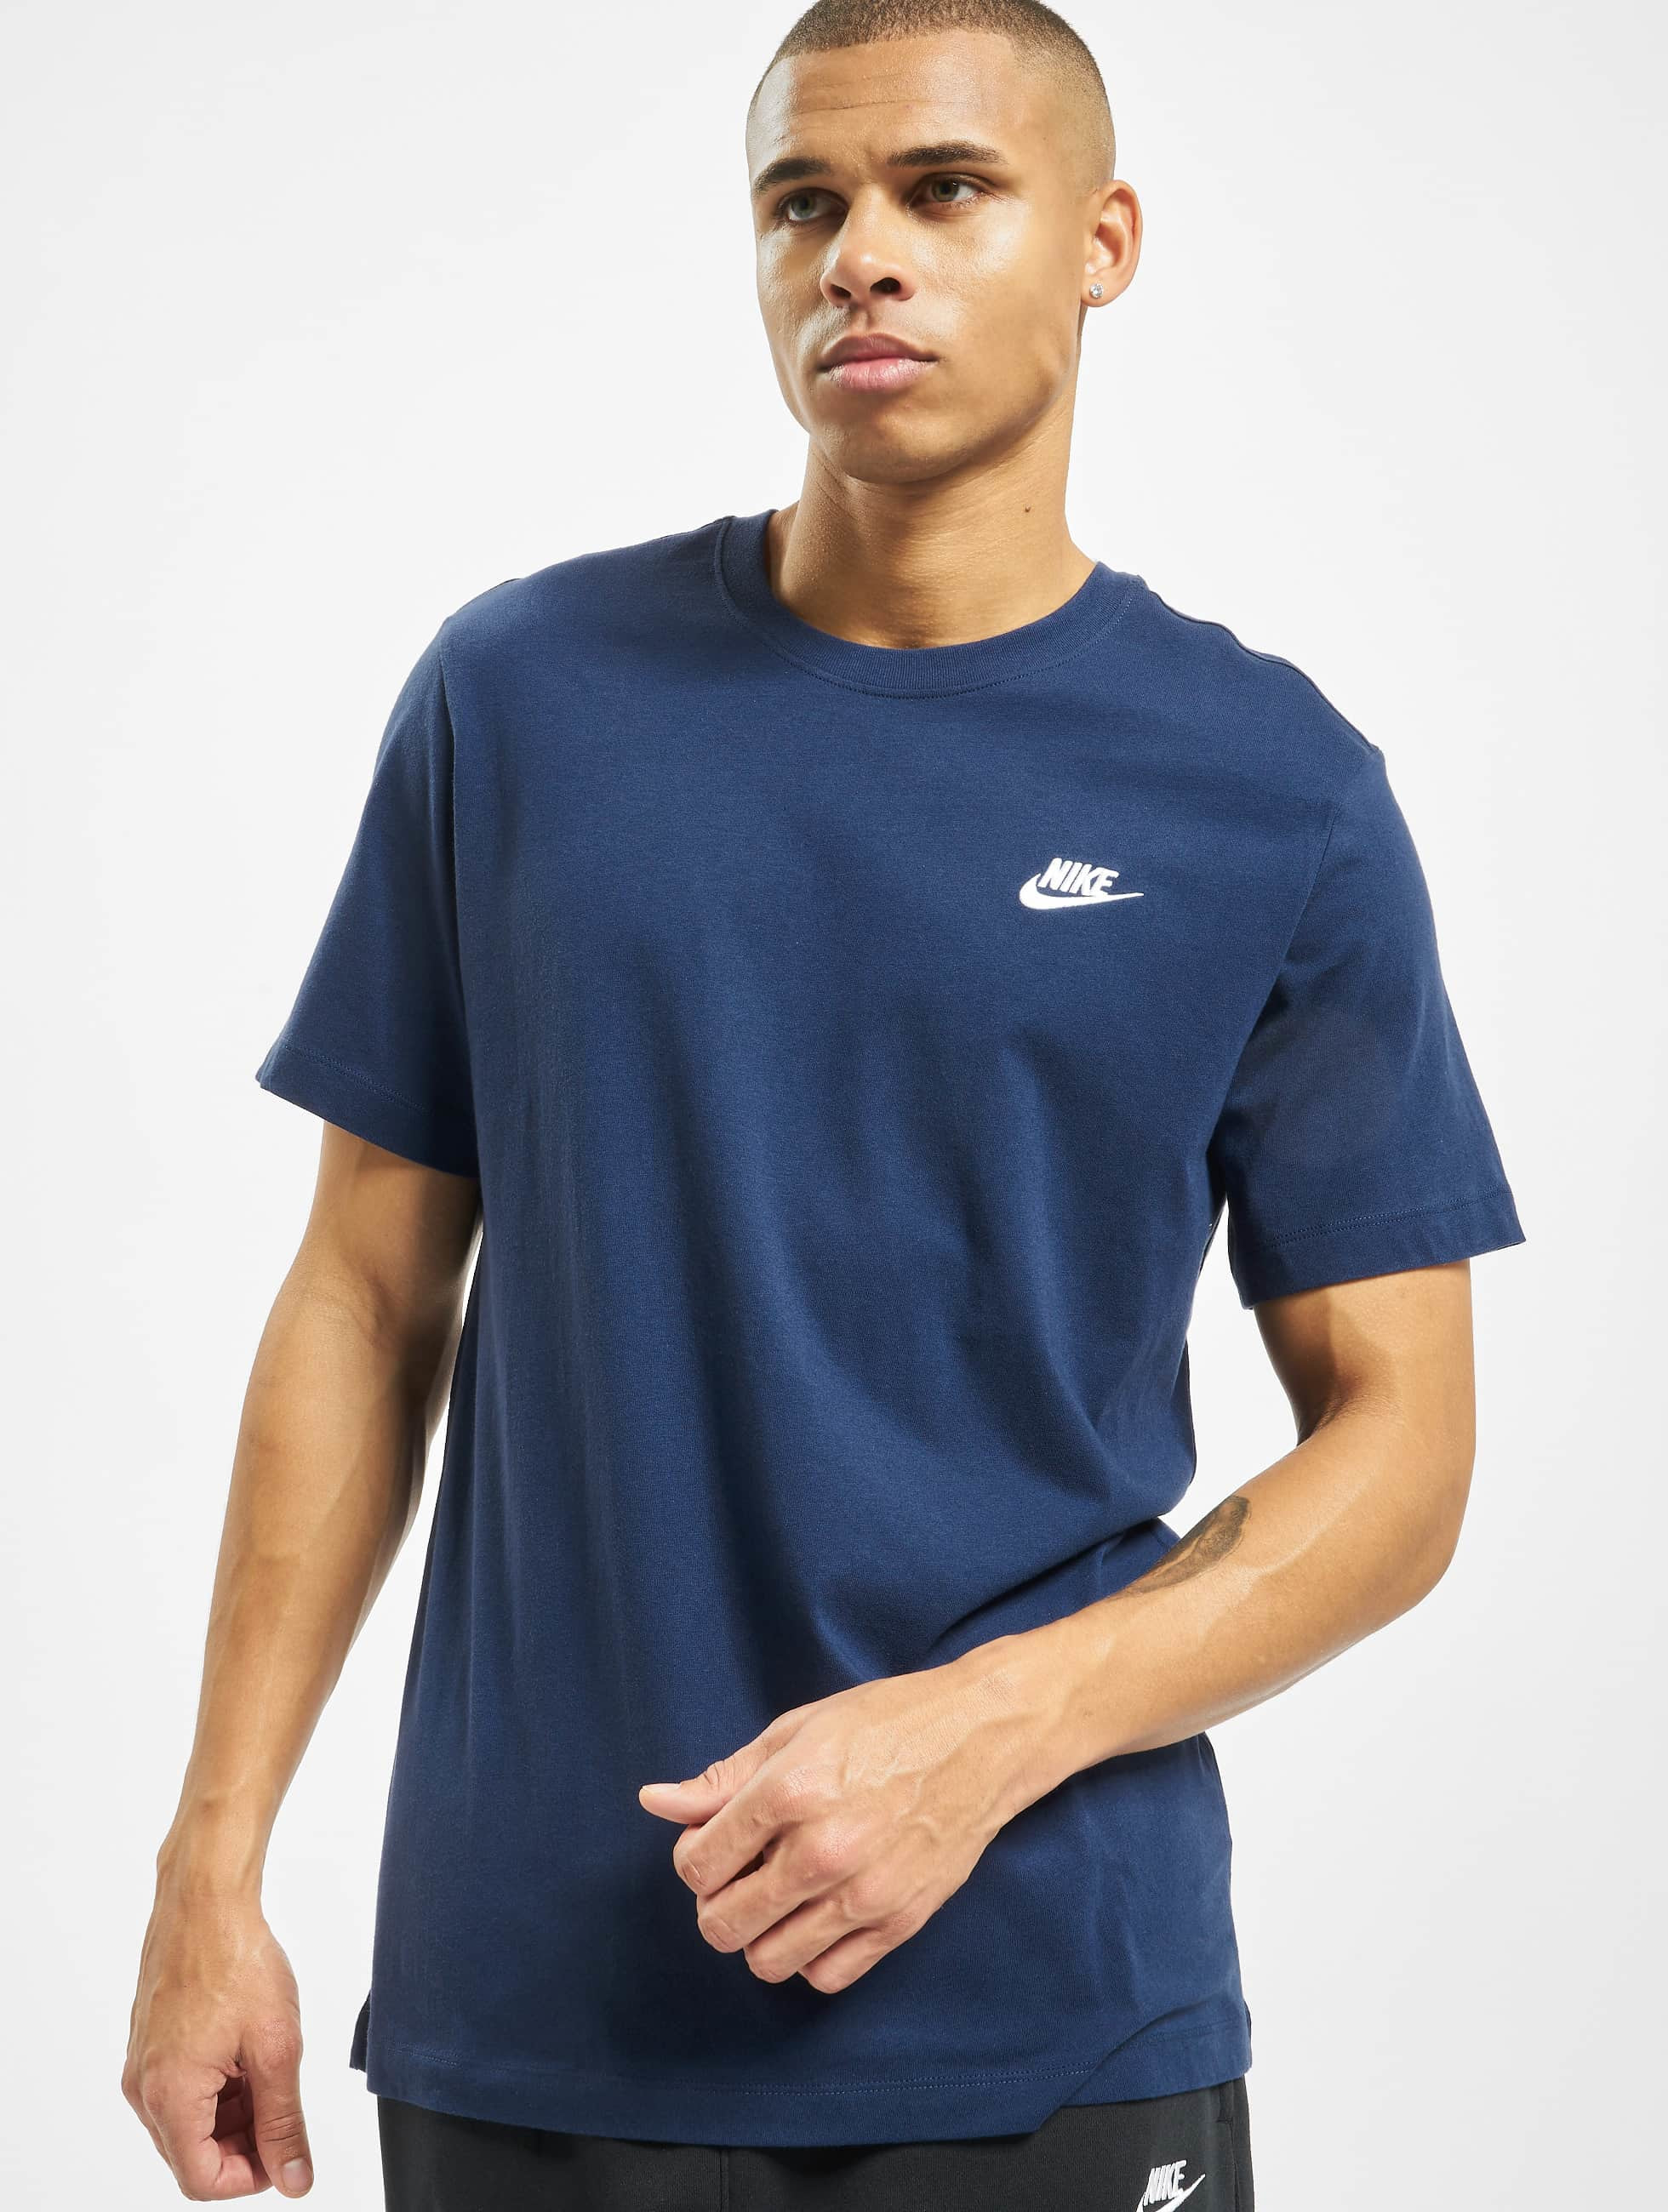 Versnellen Ale lichten Nike bovenstuk / t-shirt Club in blauw 714952